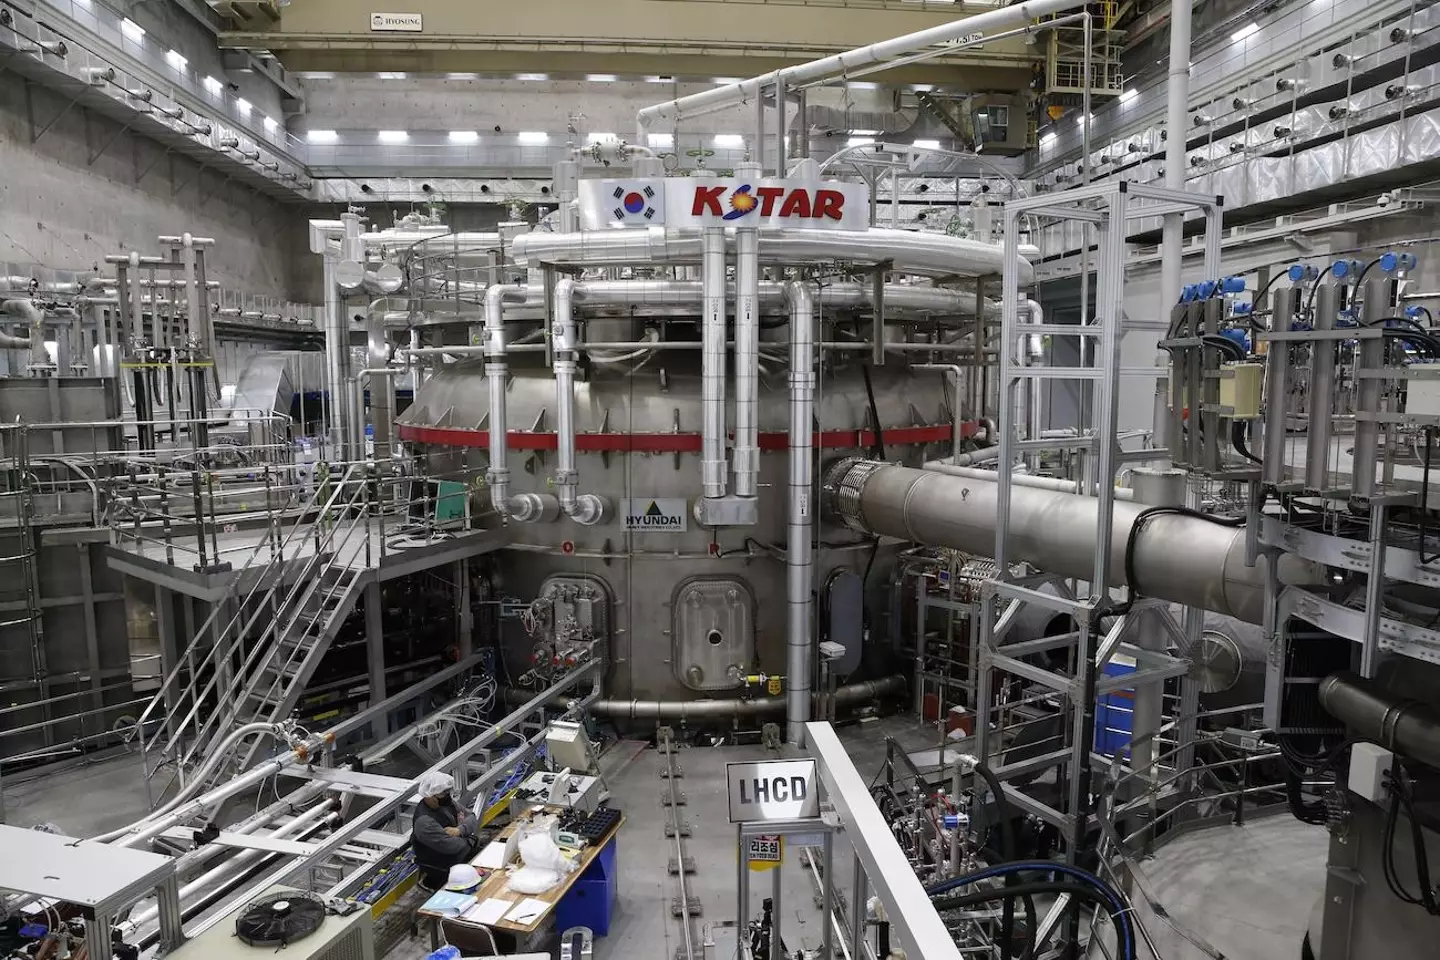 The Korean Superconducting Tokamak Advanced Research (KSTAR) device at the Korea Institute of Fusion Energy (KFE) in Daejeon, South Korea.